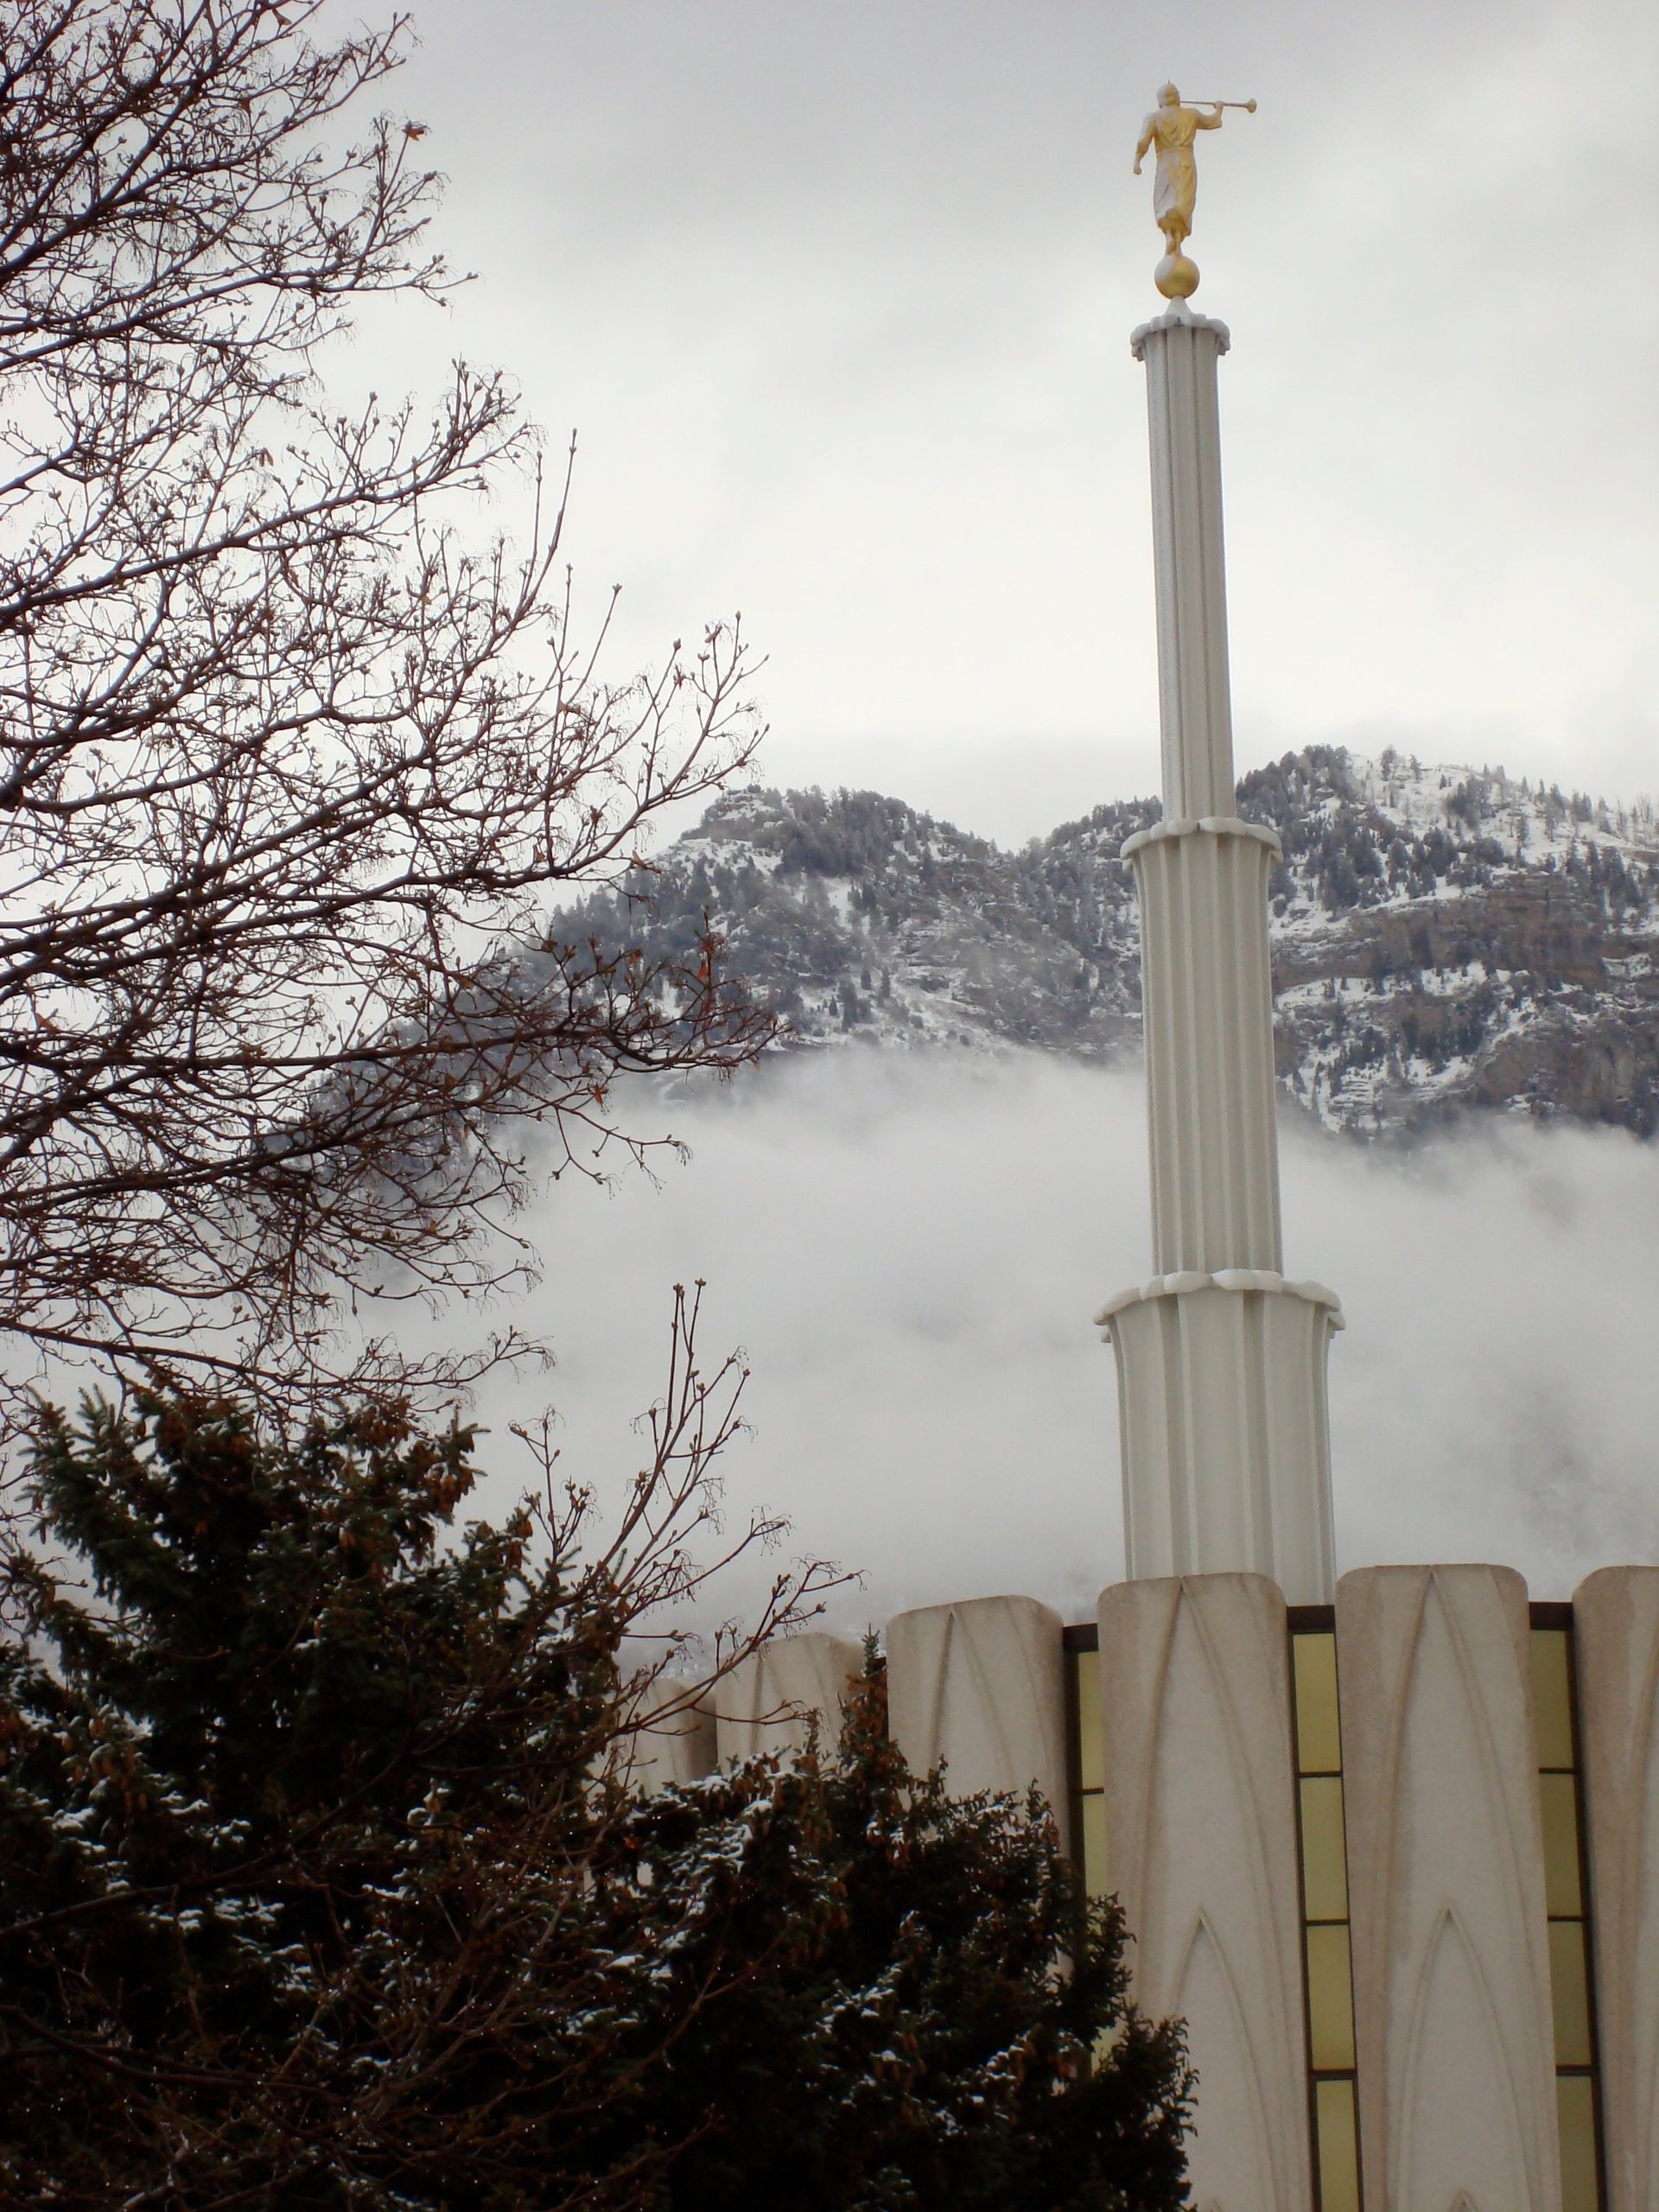 The Provo Utah Temple spire, including scenery.